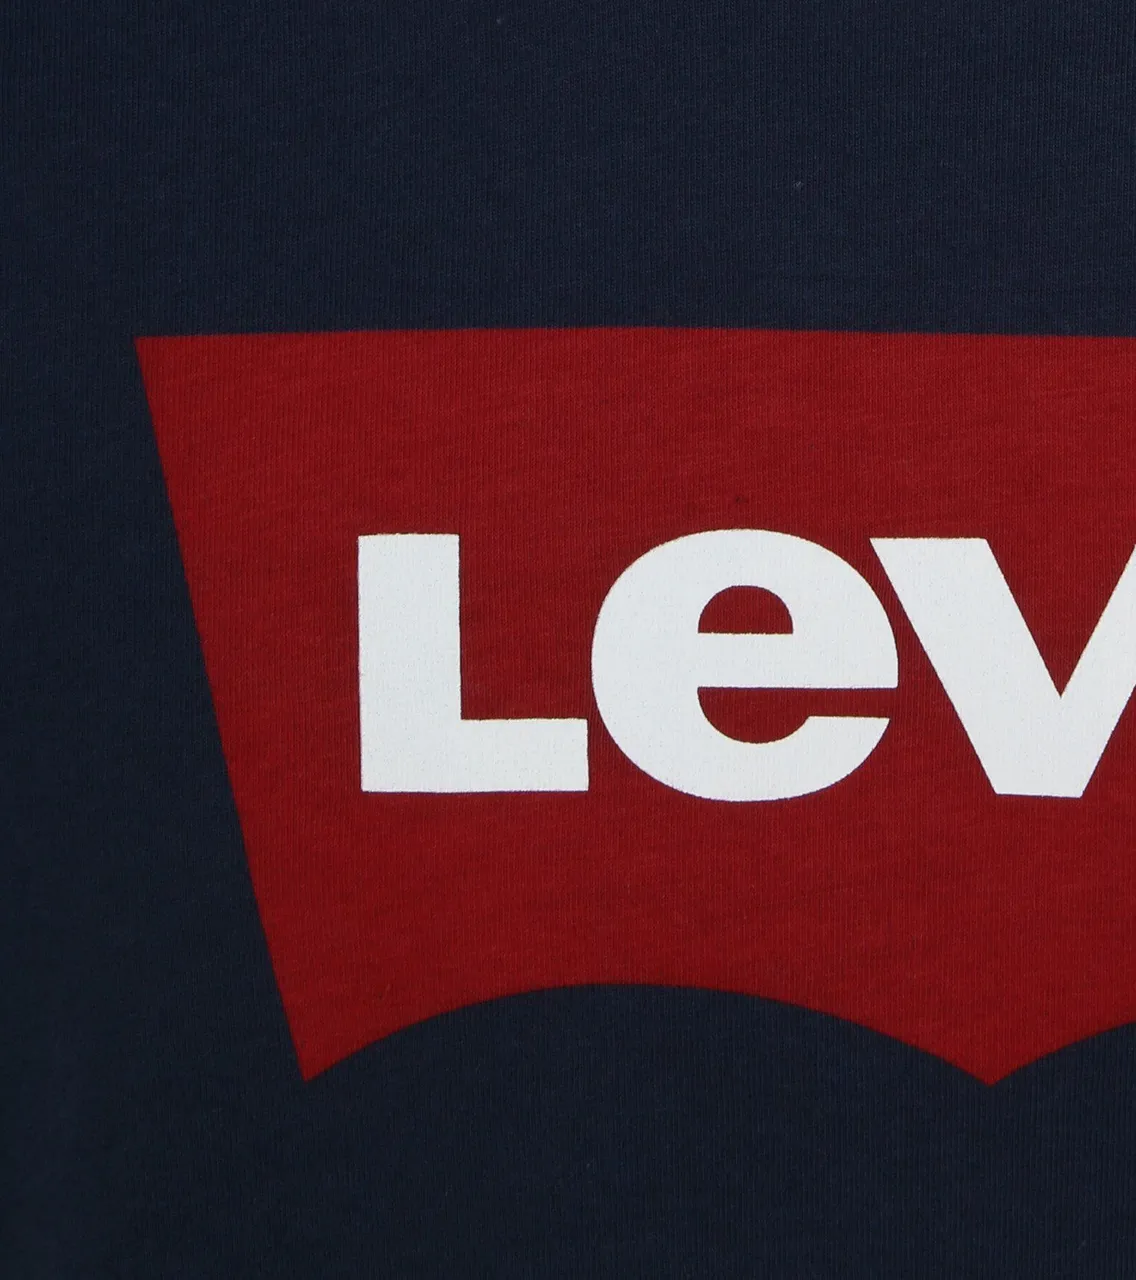 Levi's T-Shirt Graphic Logo Navy Dark Blue Blue